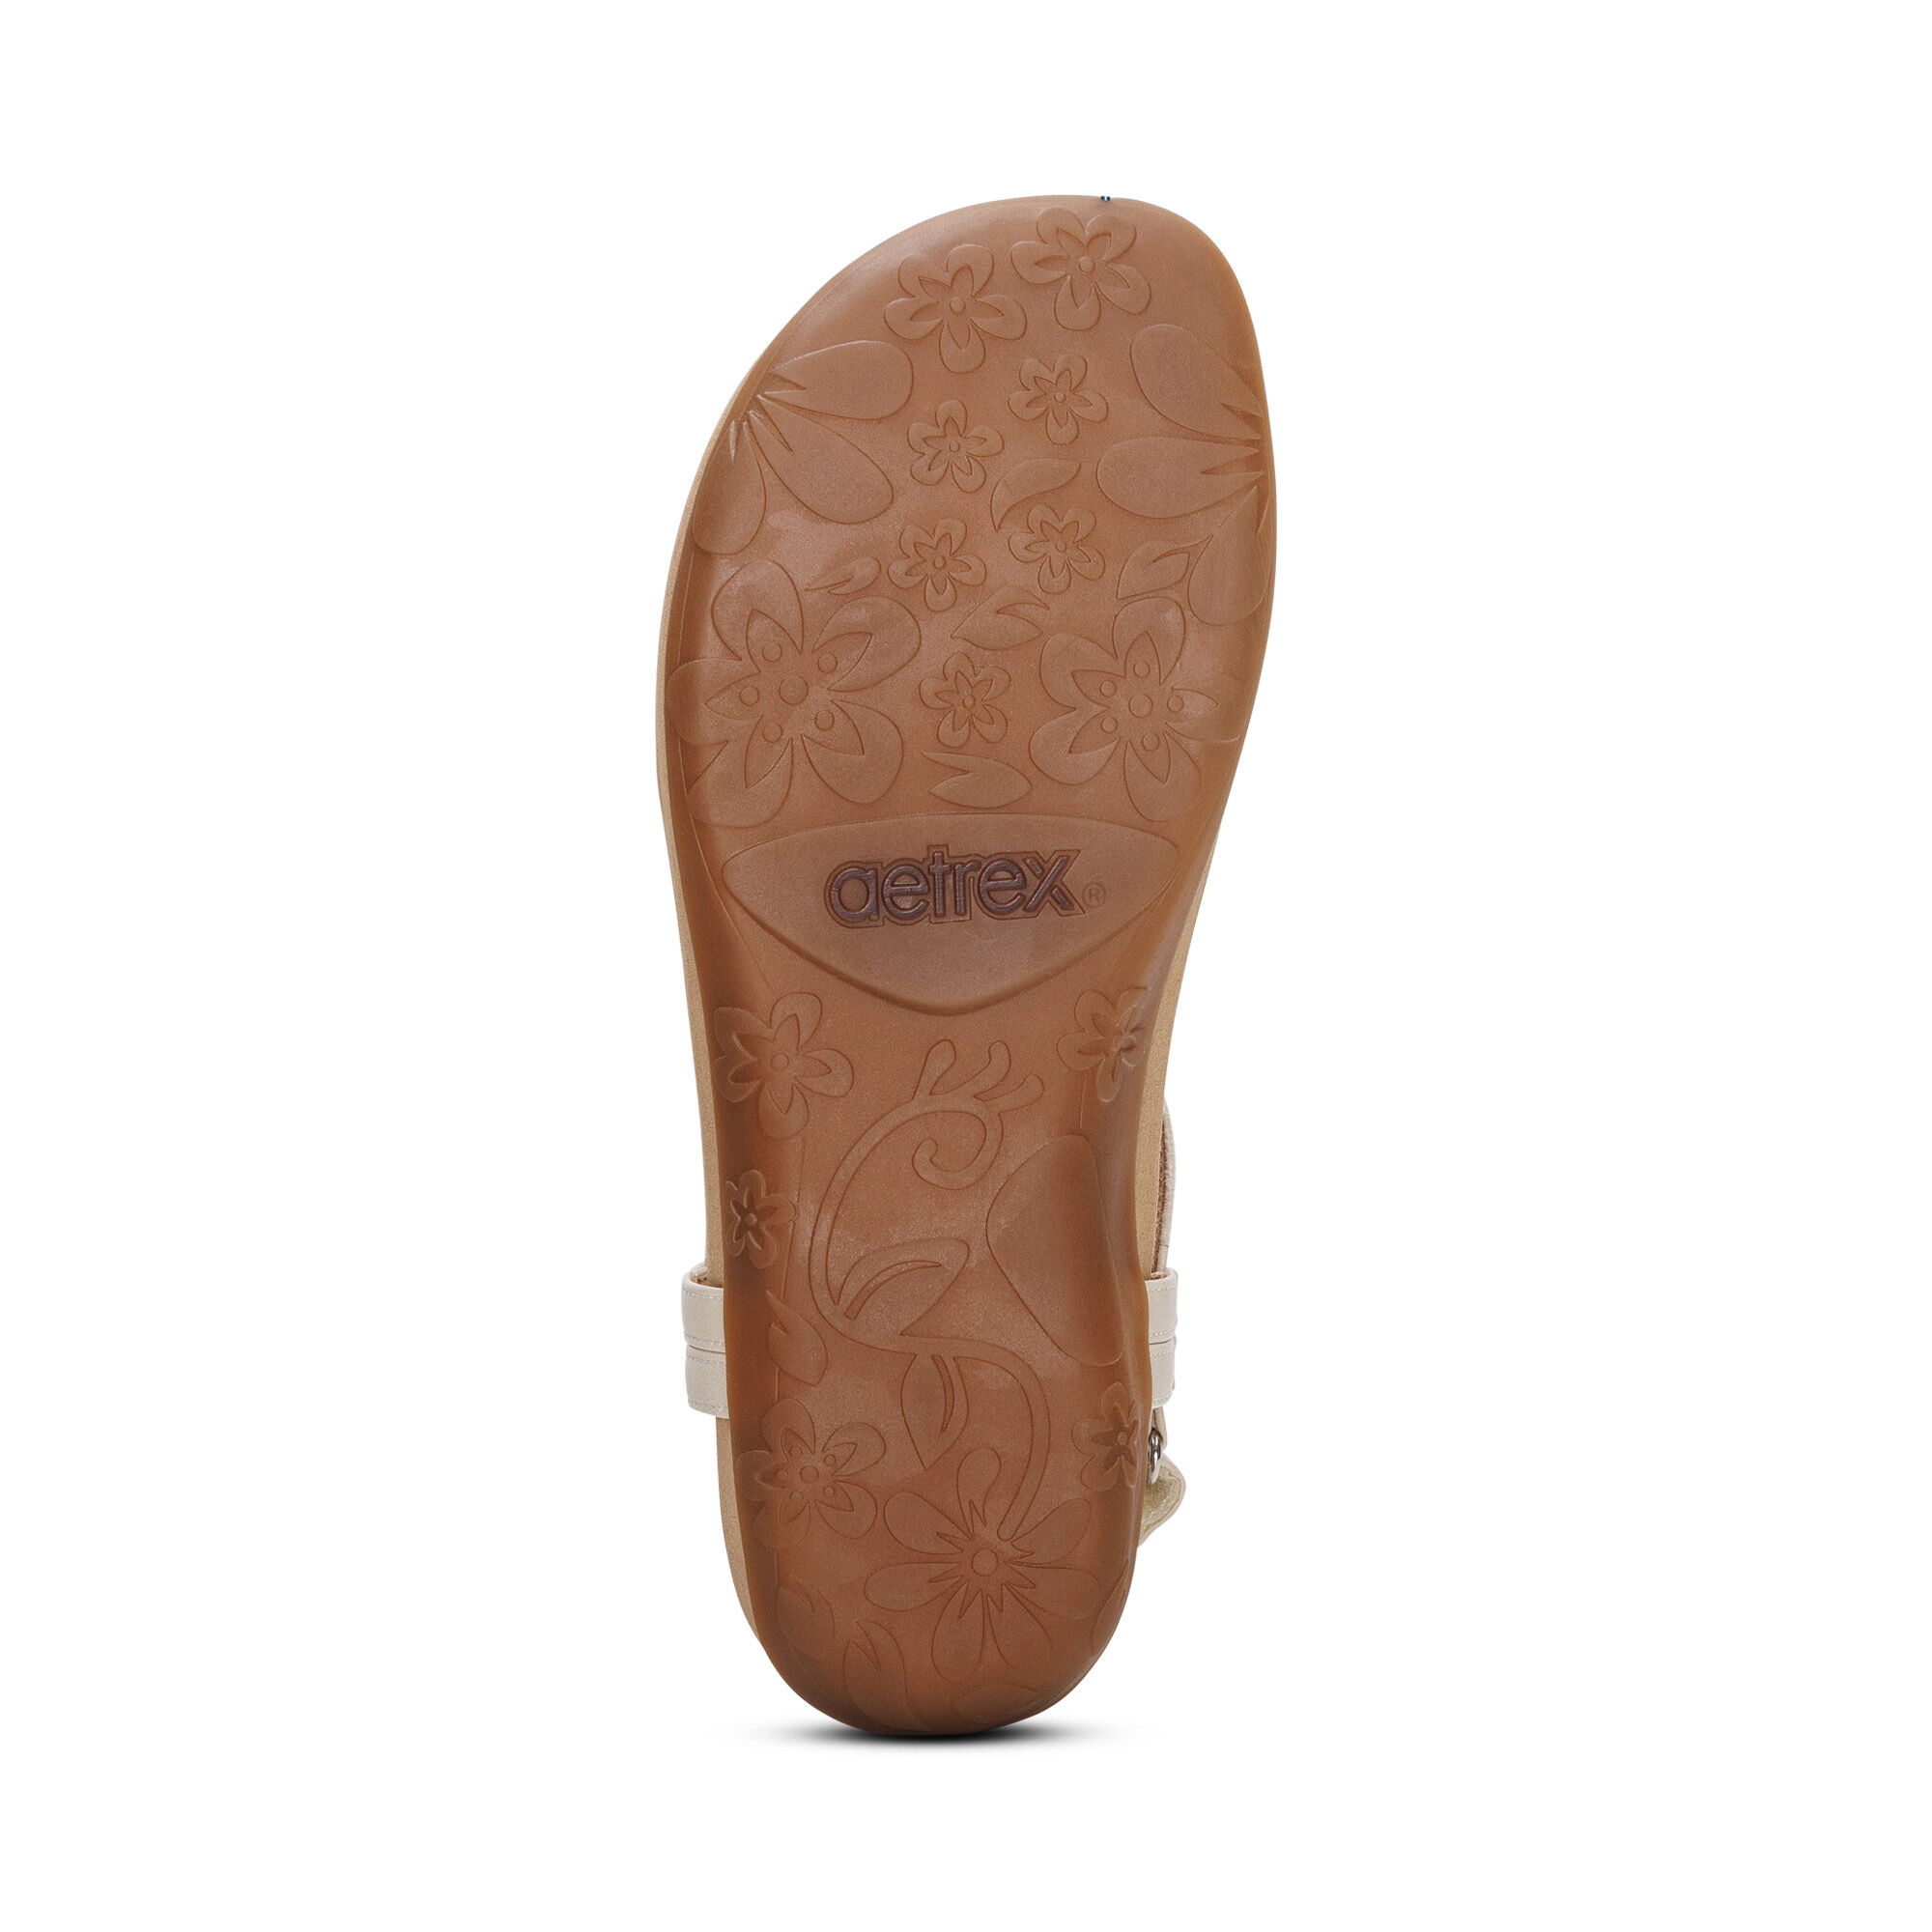 Marni slingback round-toe sandals - Green